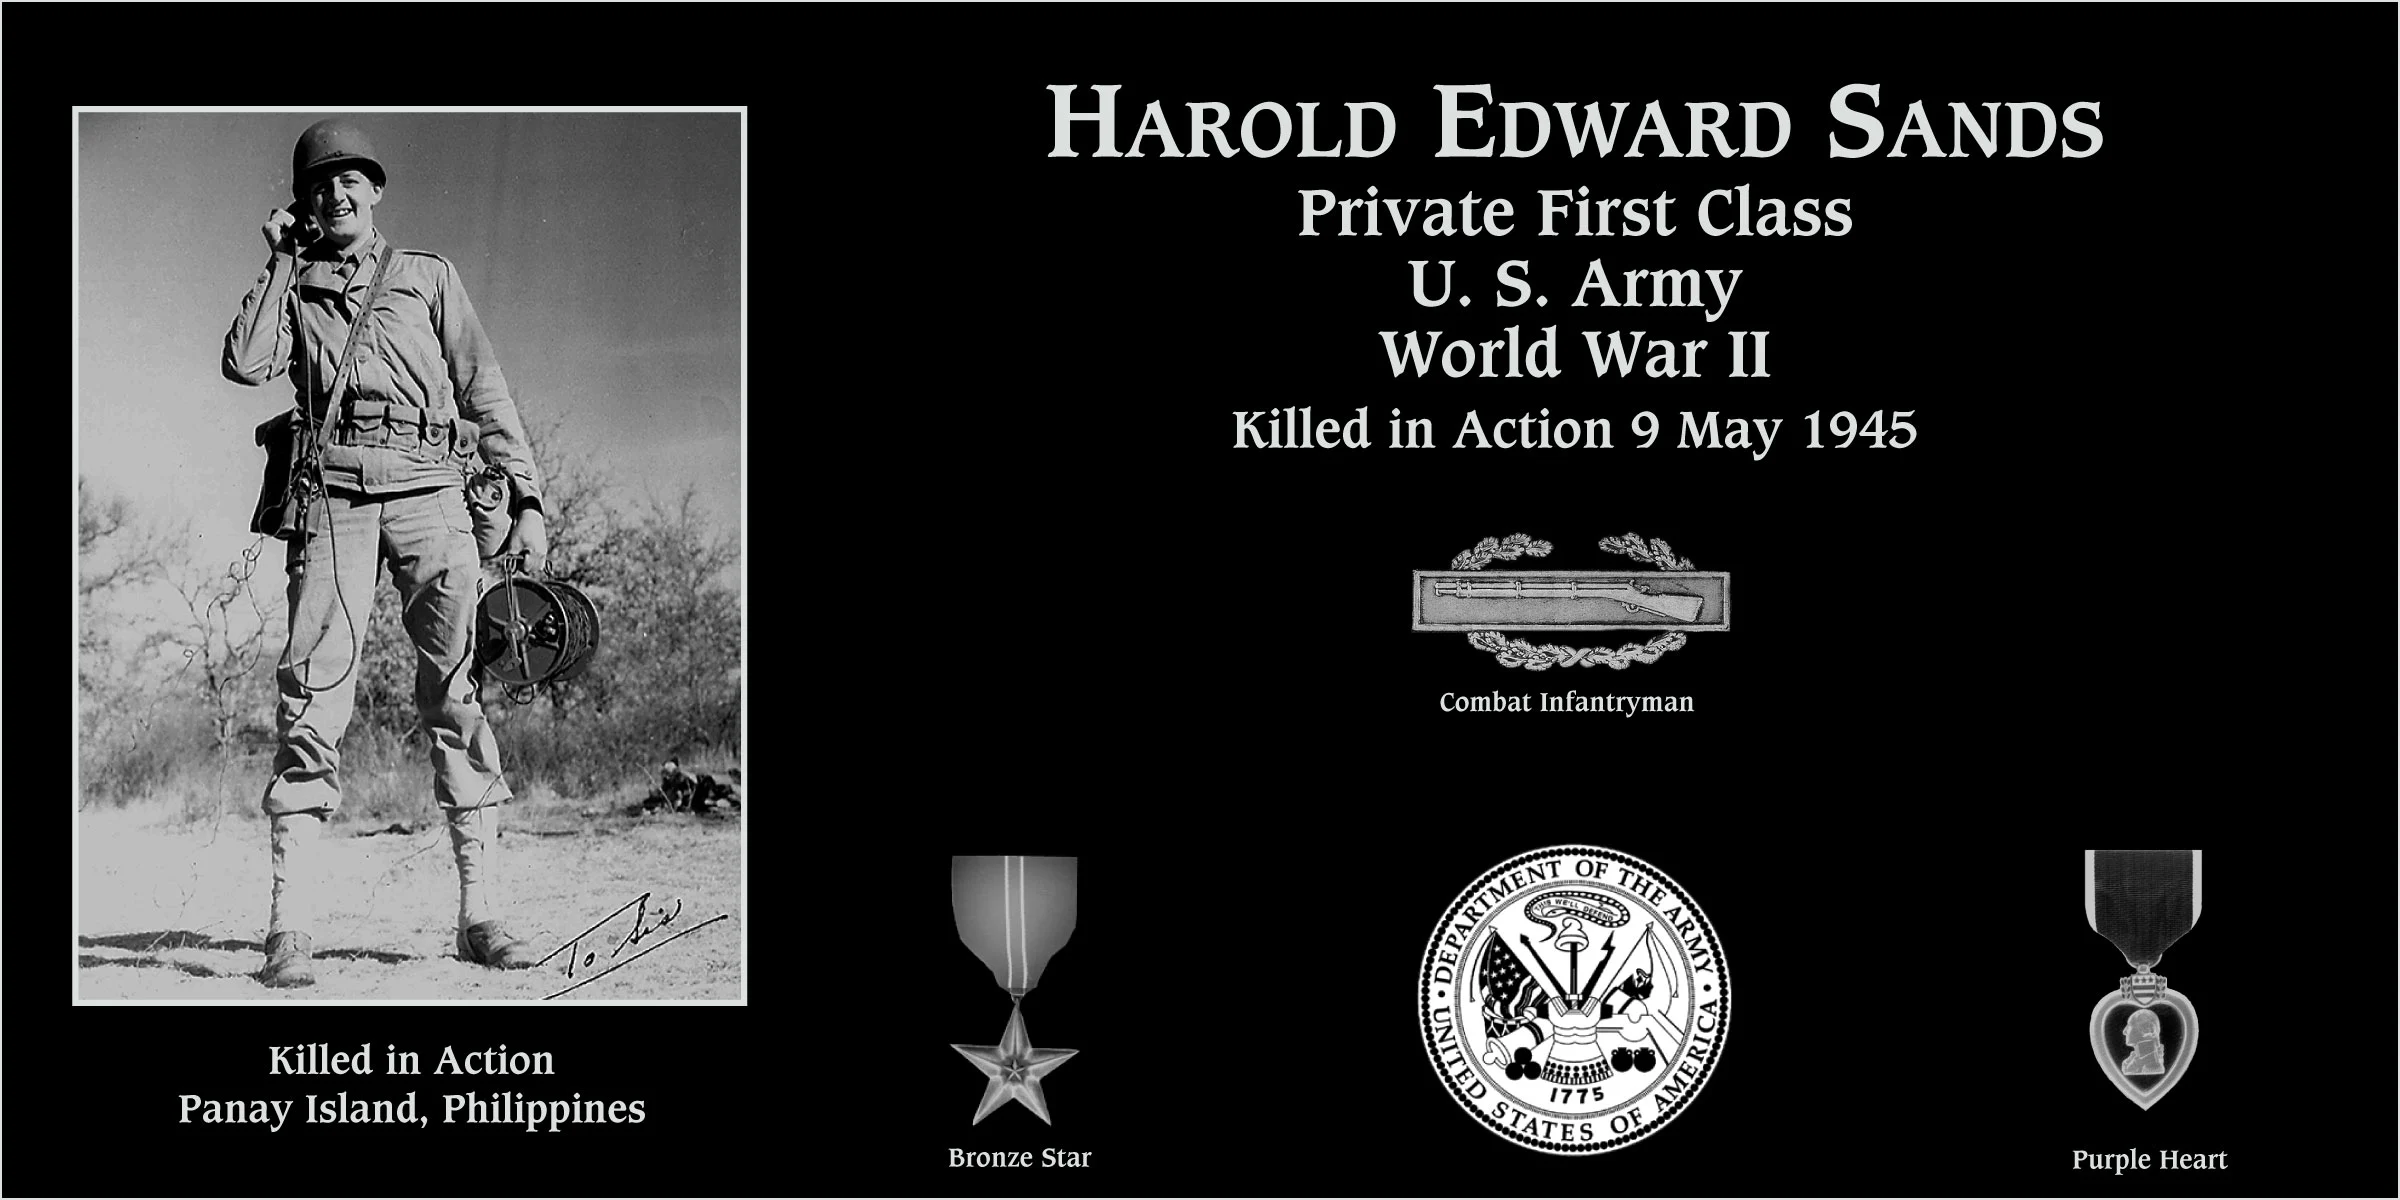 Harold Edward Sands